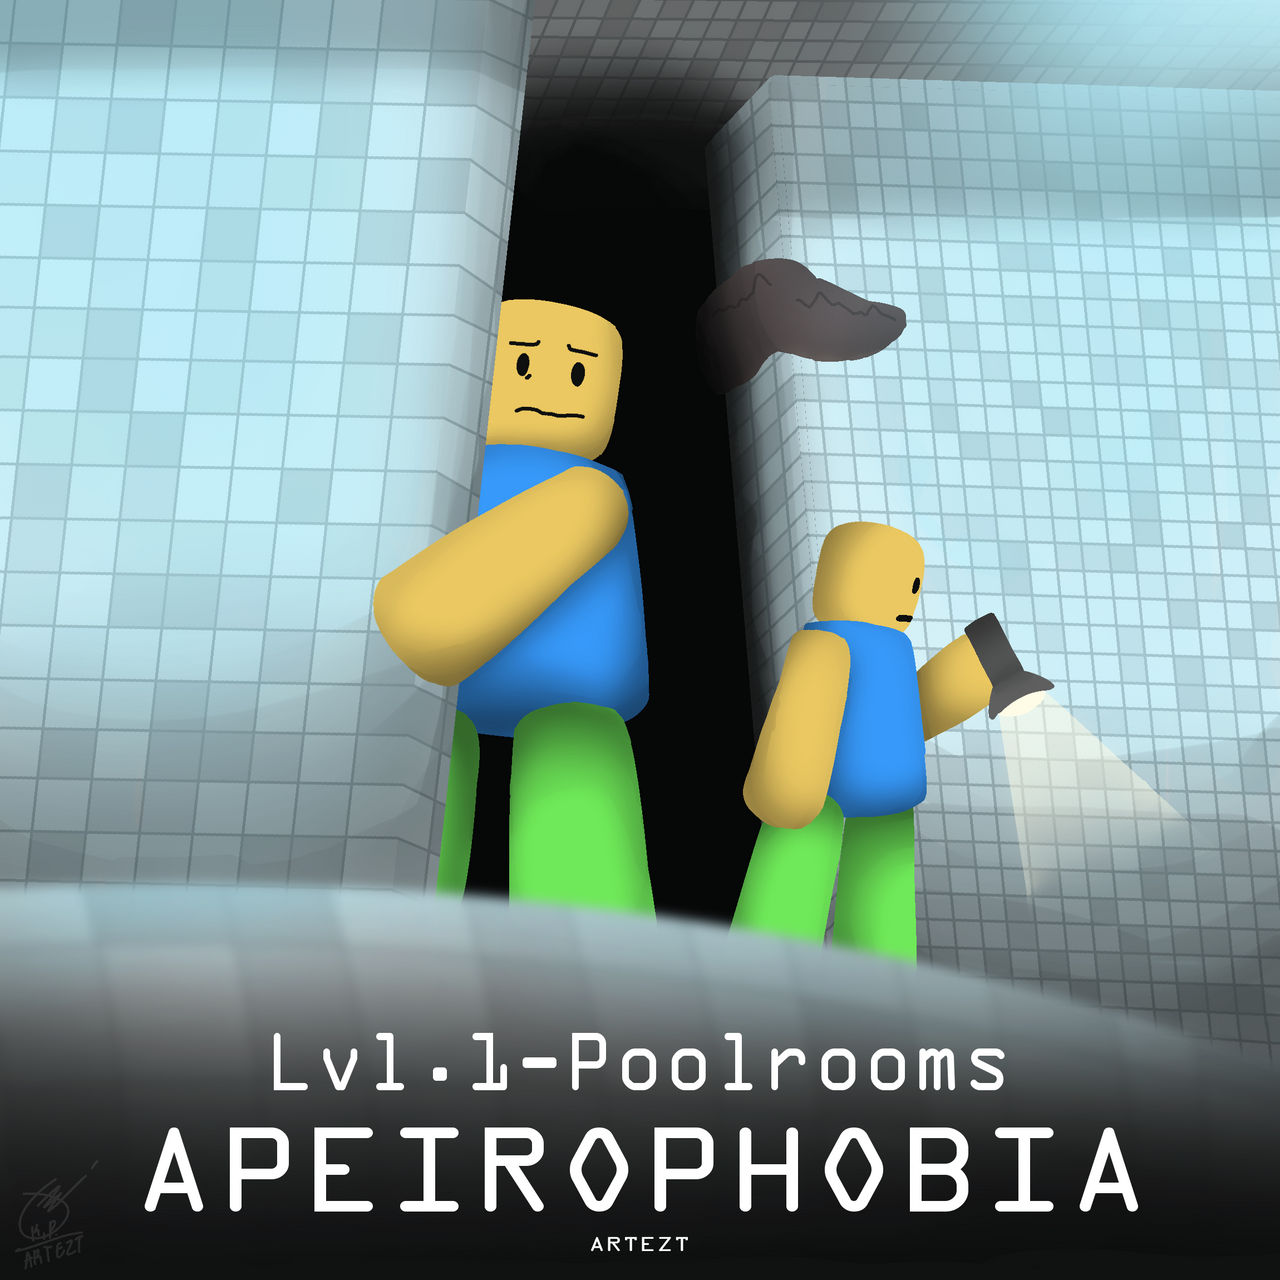 Apeirophobia [Levels 1-4] - Full gameplay